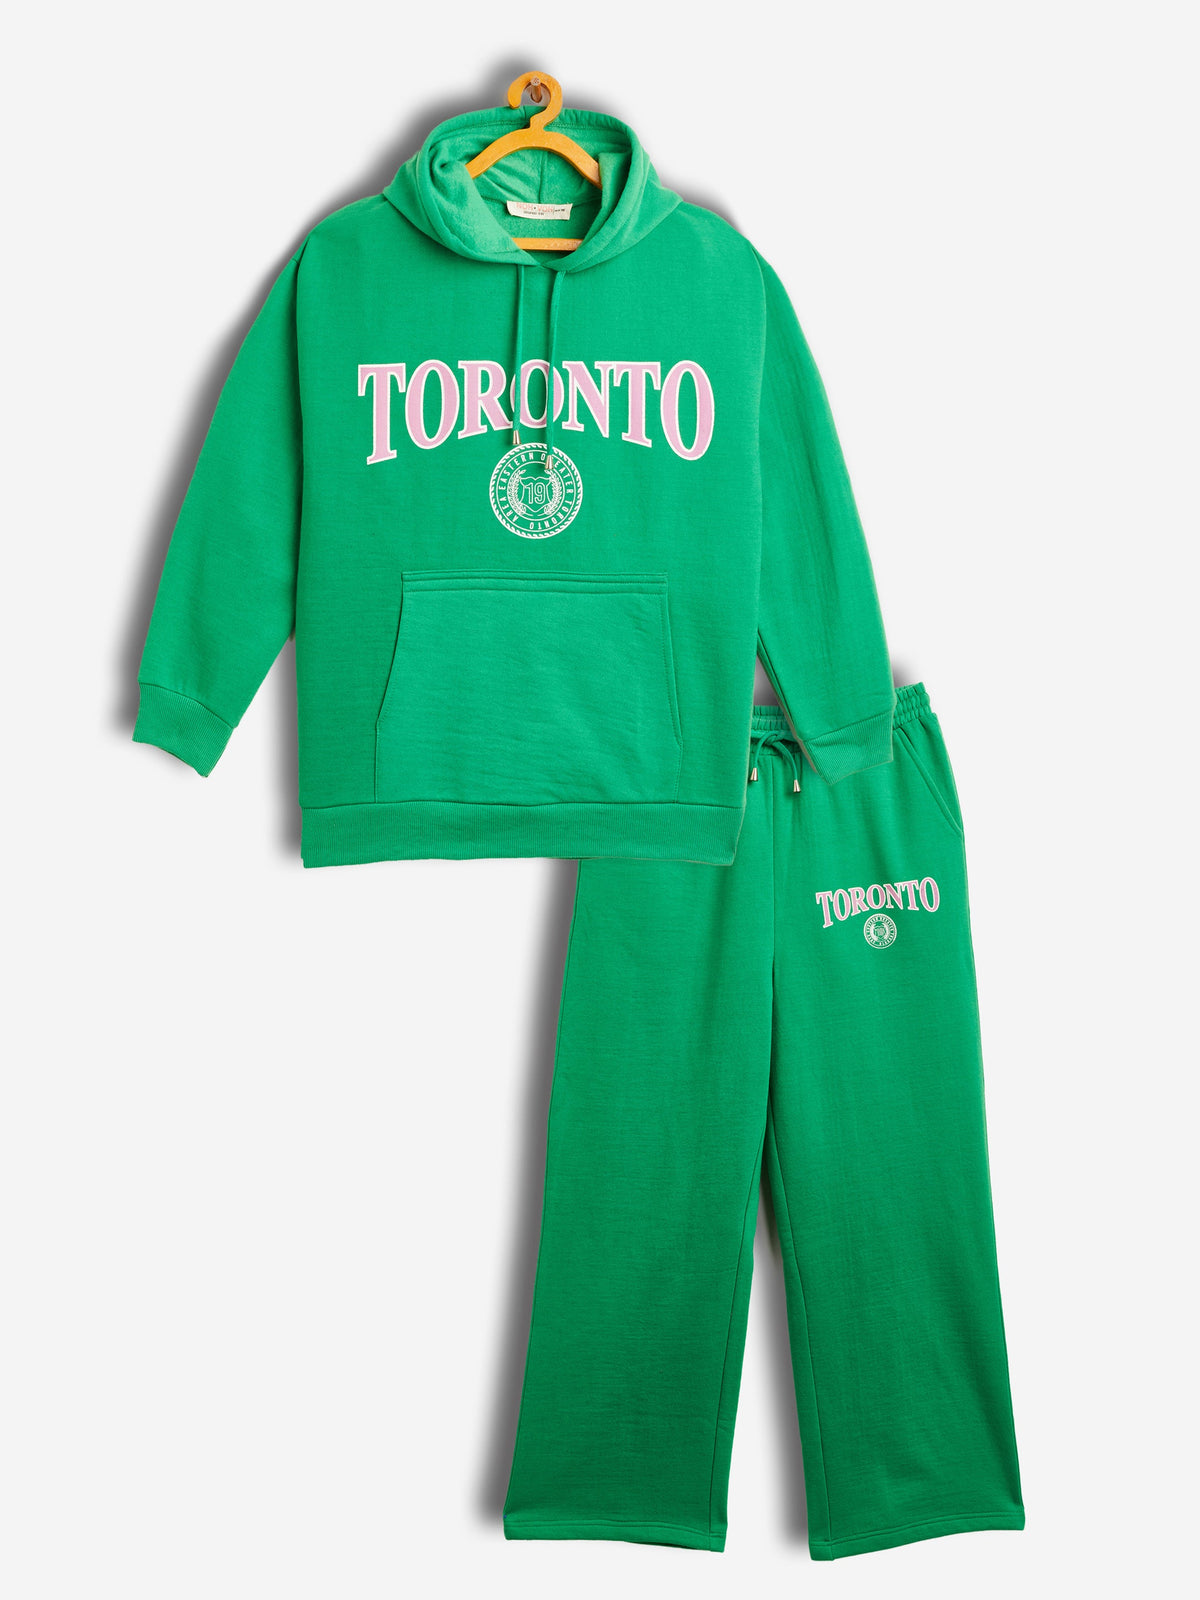 Green TORONTO Oversized Sweatshirt With Track Pants-Noh.Voh